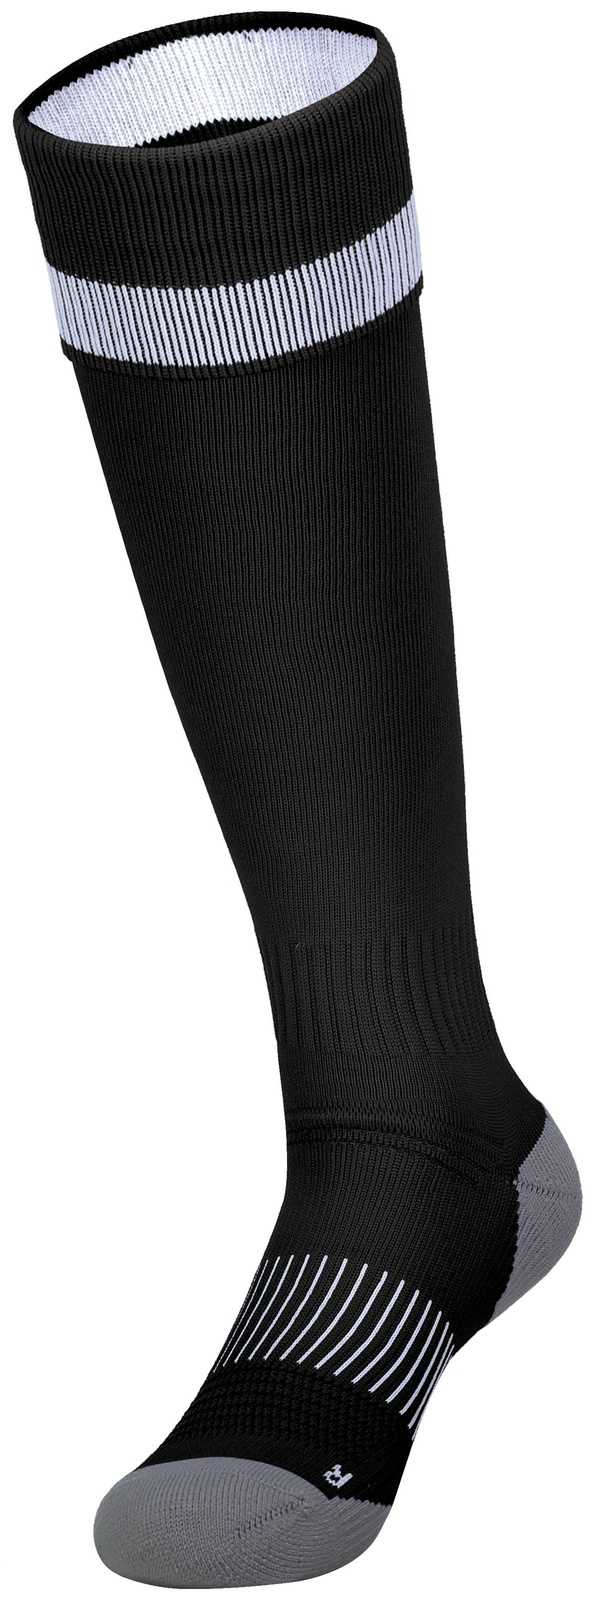 High Five 329120 Impact+ Soccer Sock - Black White Graphite - HIT a Double